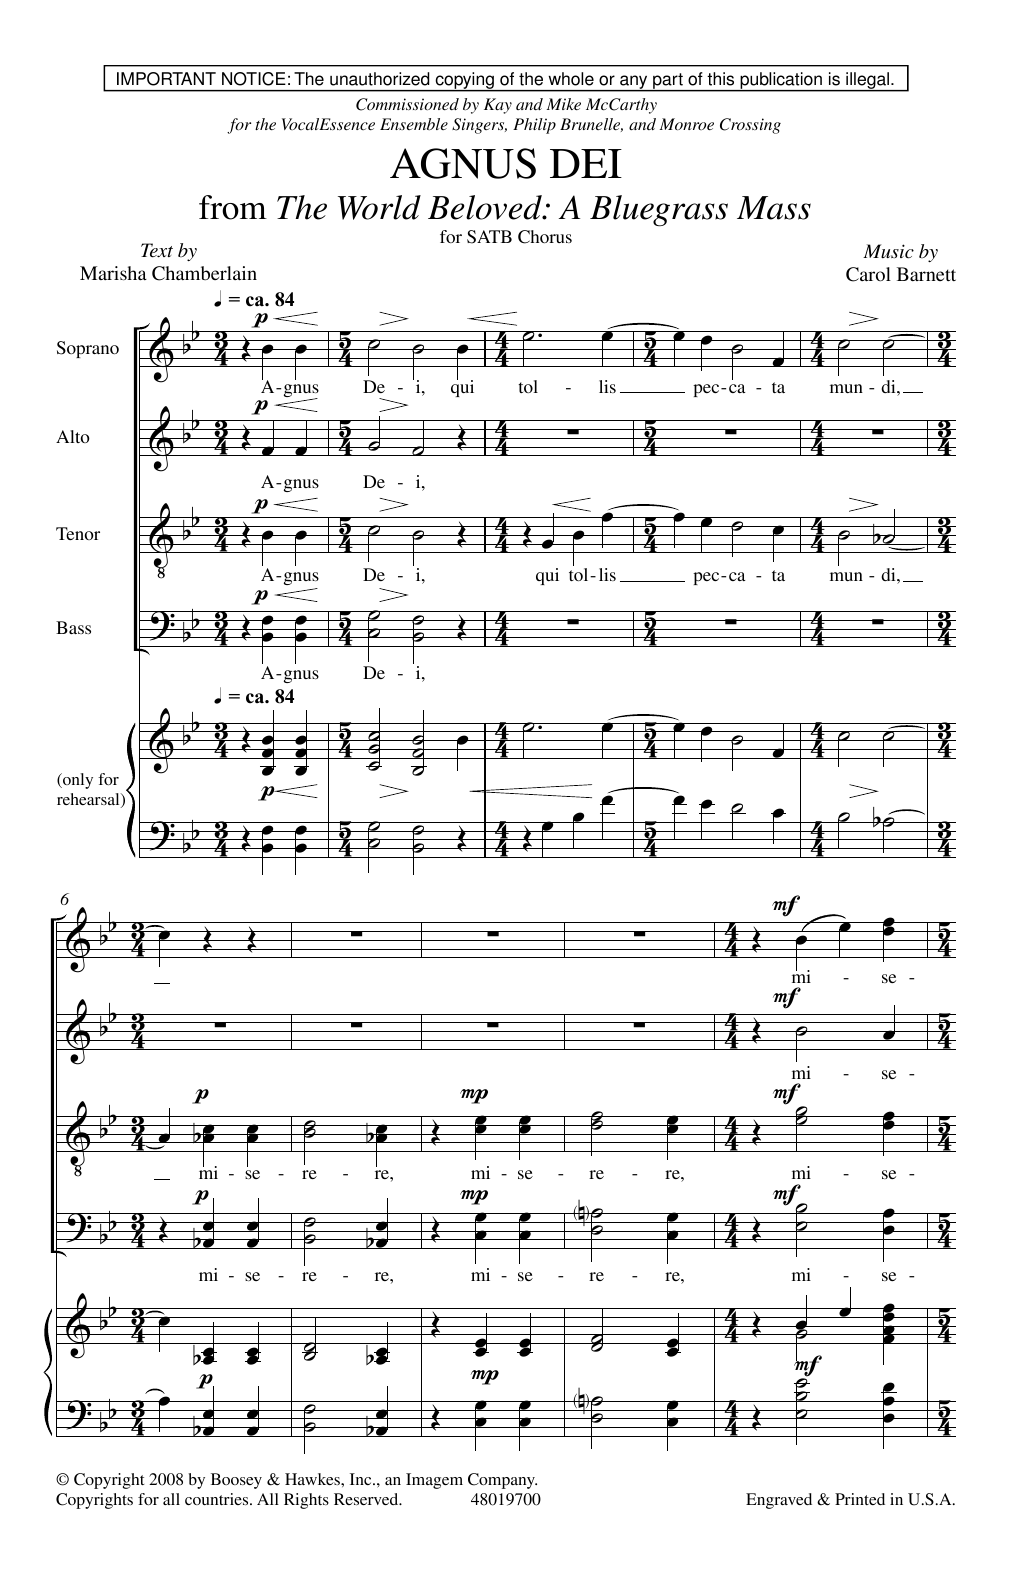 Carol Barnett Agnus Dei (from The World Beloved: A Bluegrass Mass) Sheet Music Notes & Chords for SATB Choir - Download or Print PDF